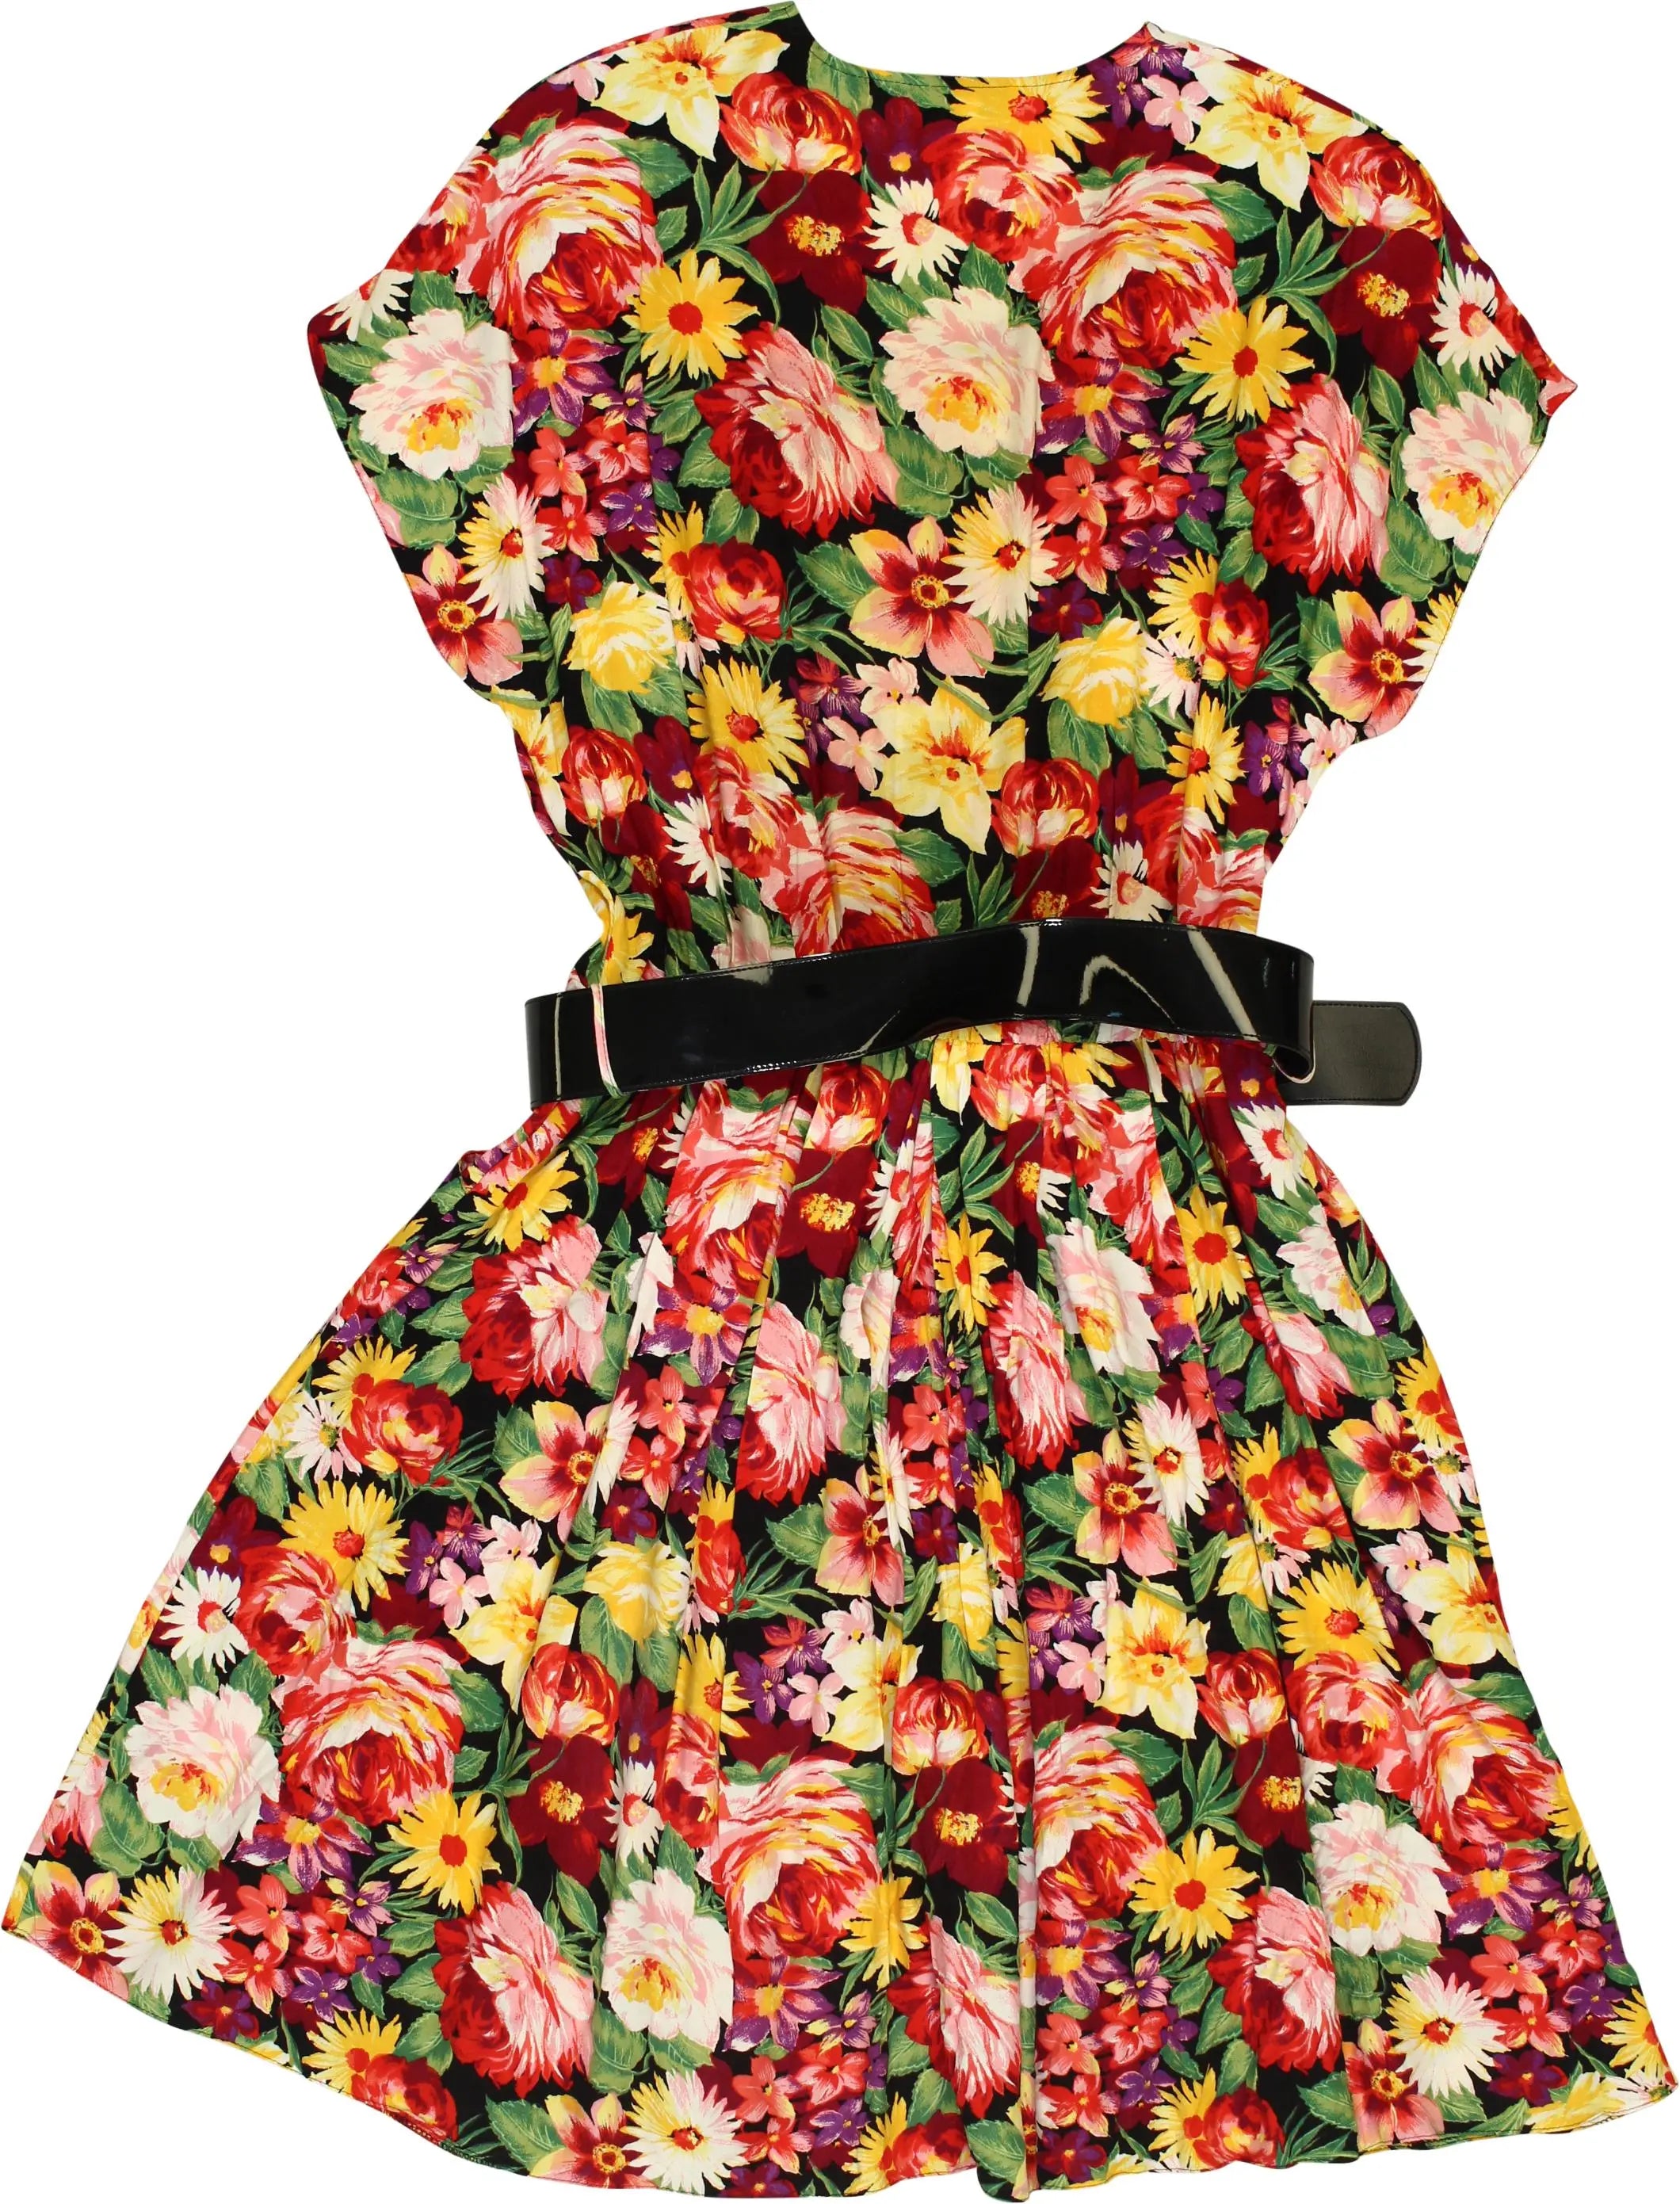 Steilmann - 80s Floral Dress- ThriftTale.com - Vintage and second handclothing